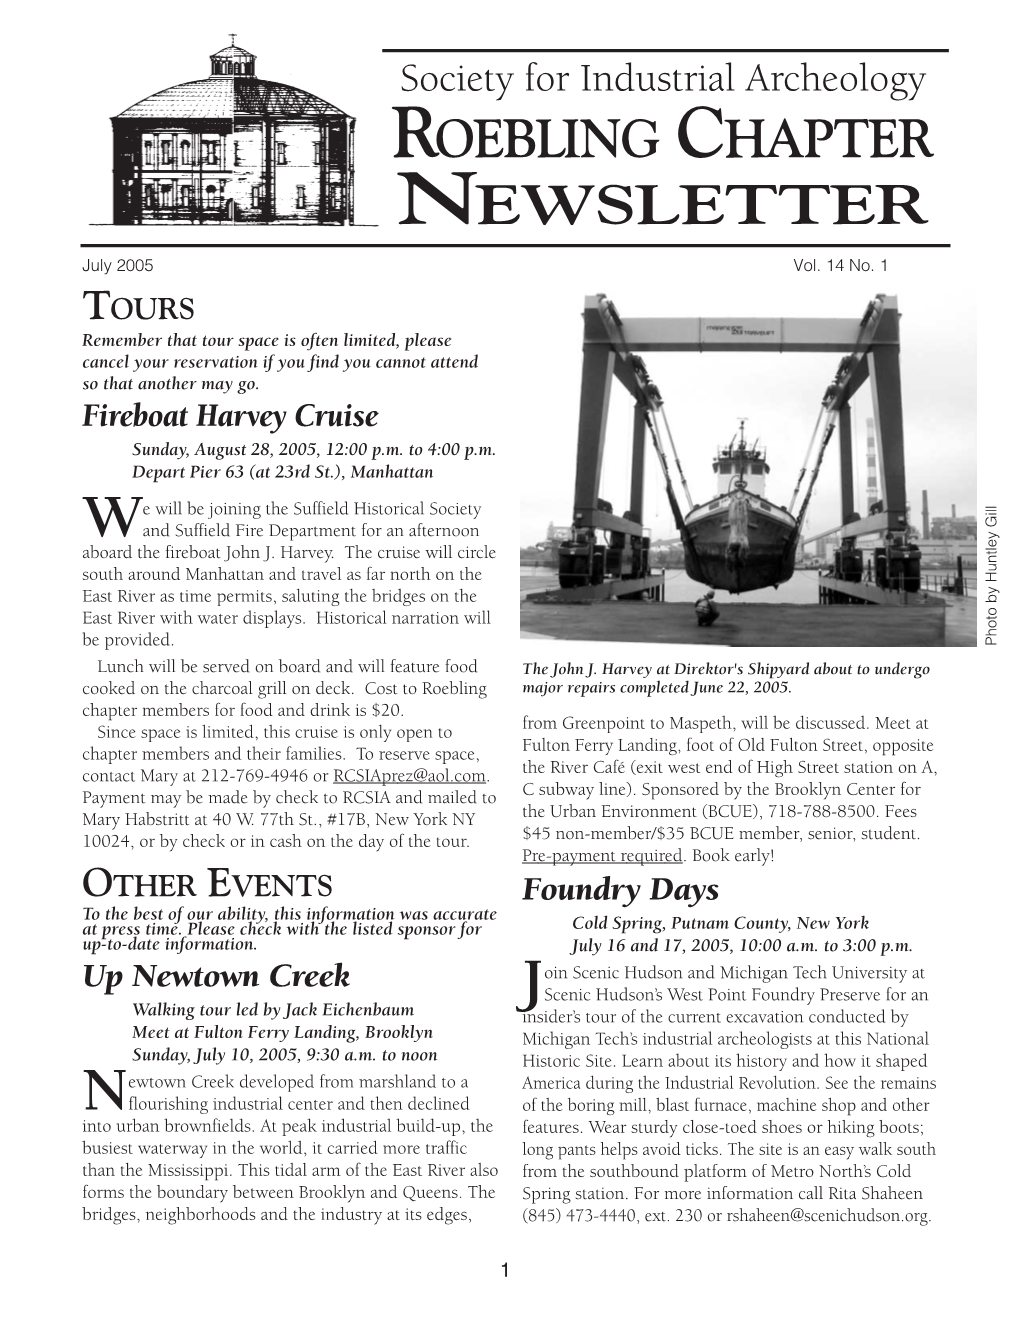 Roebling Chap. Newsletter, 14-1